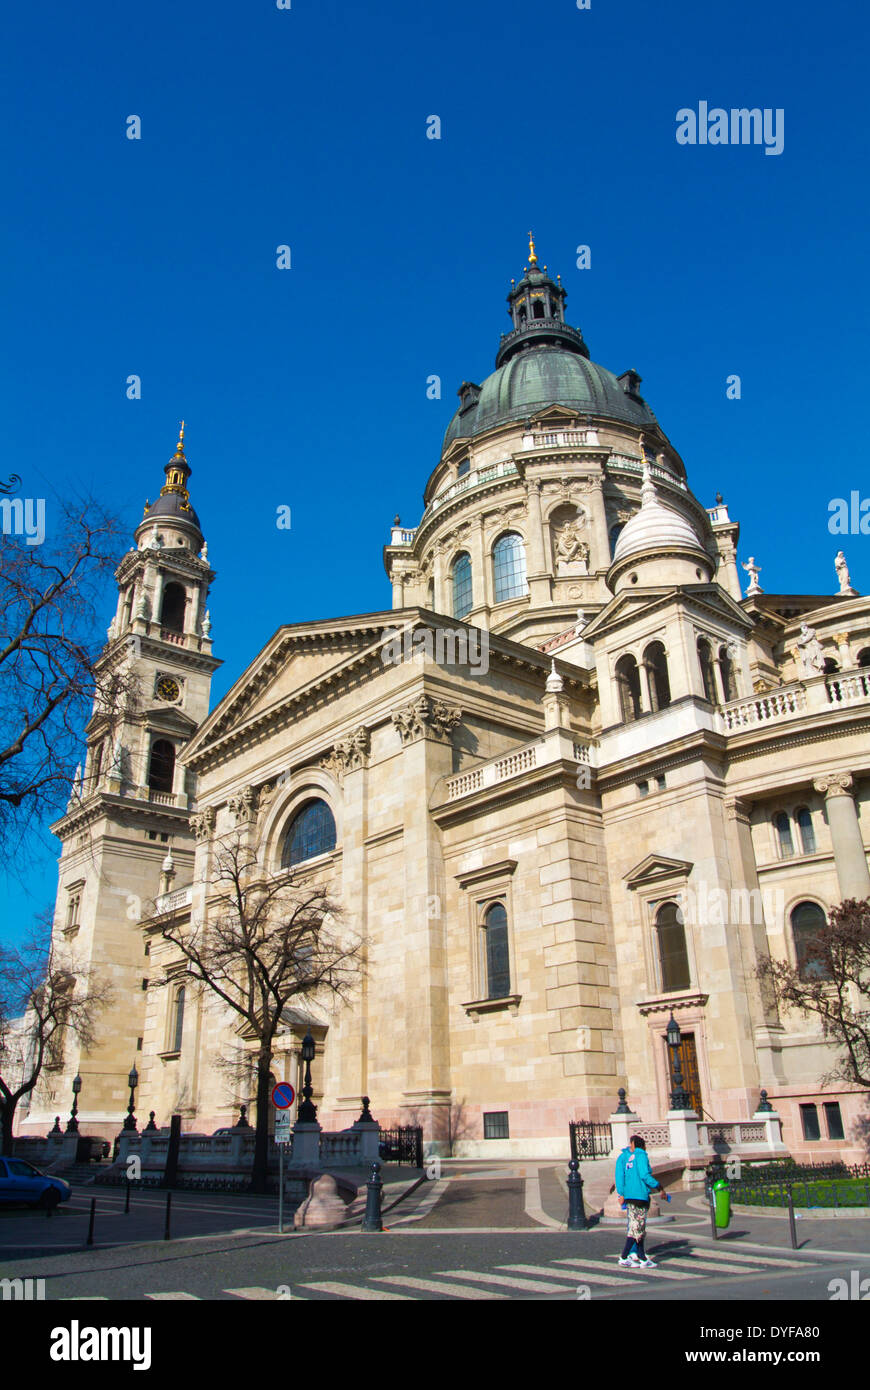 Szent Istvan bazilik, Saint Stephen's basilica church, Budapest, Hungary, Europe Stock Photo